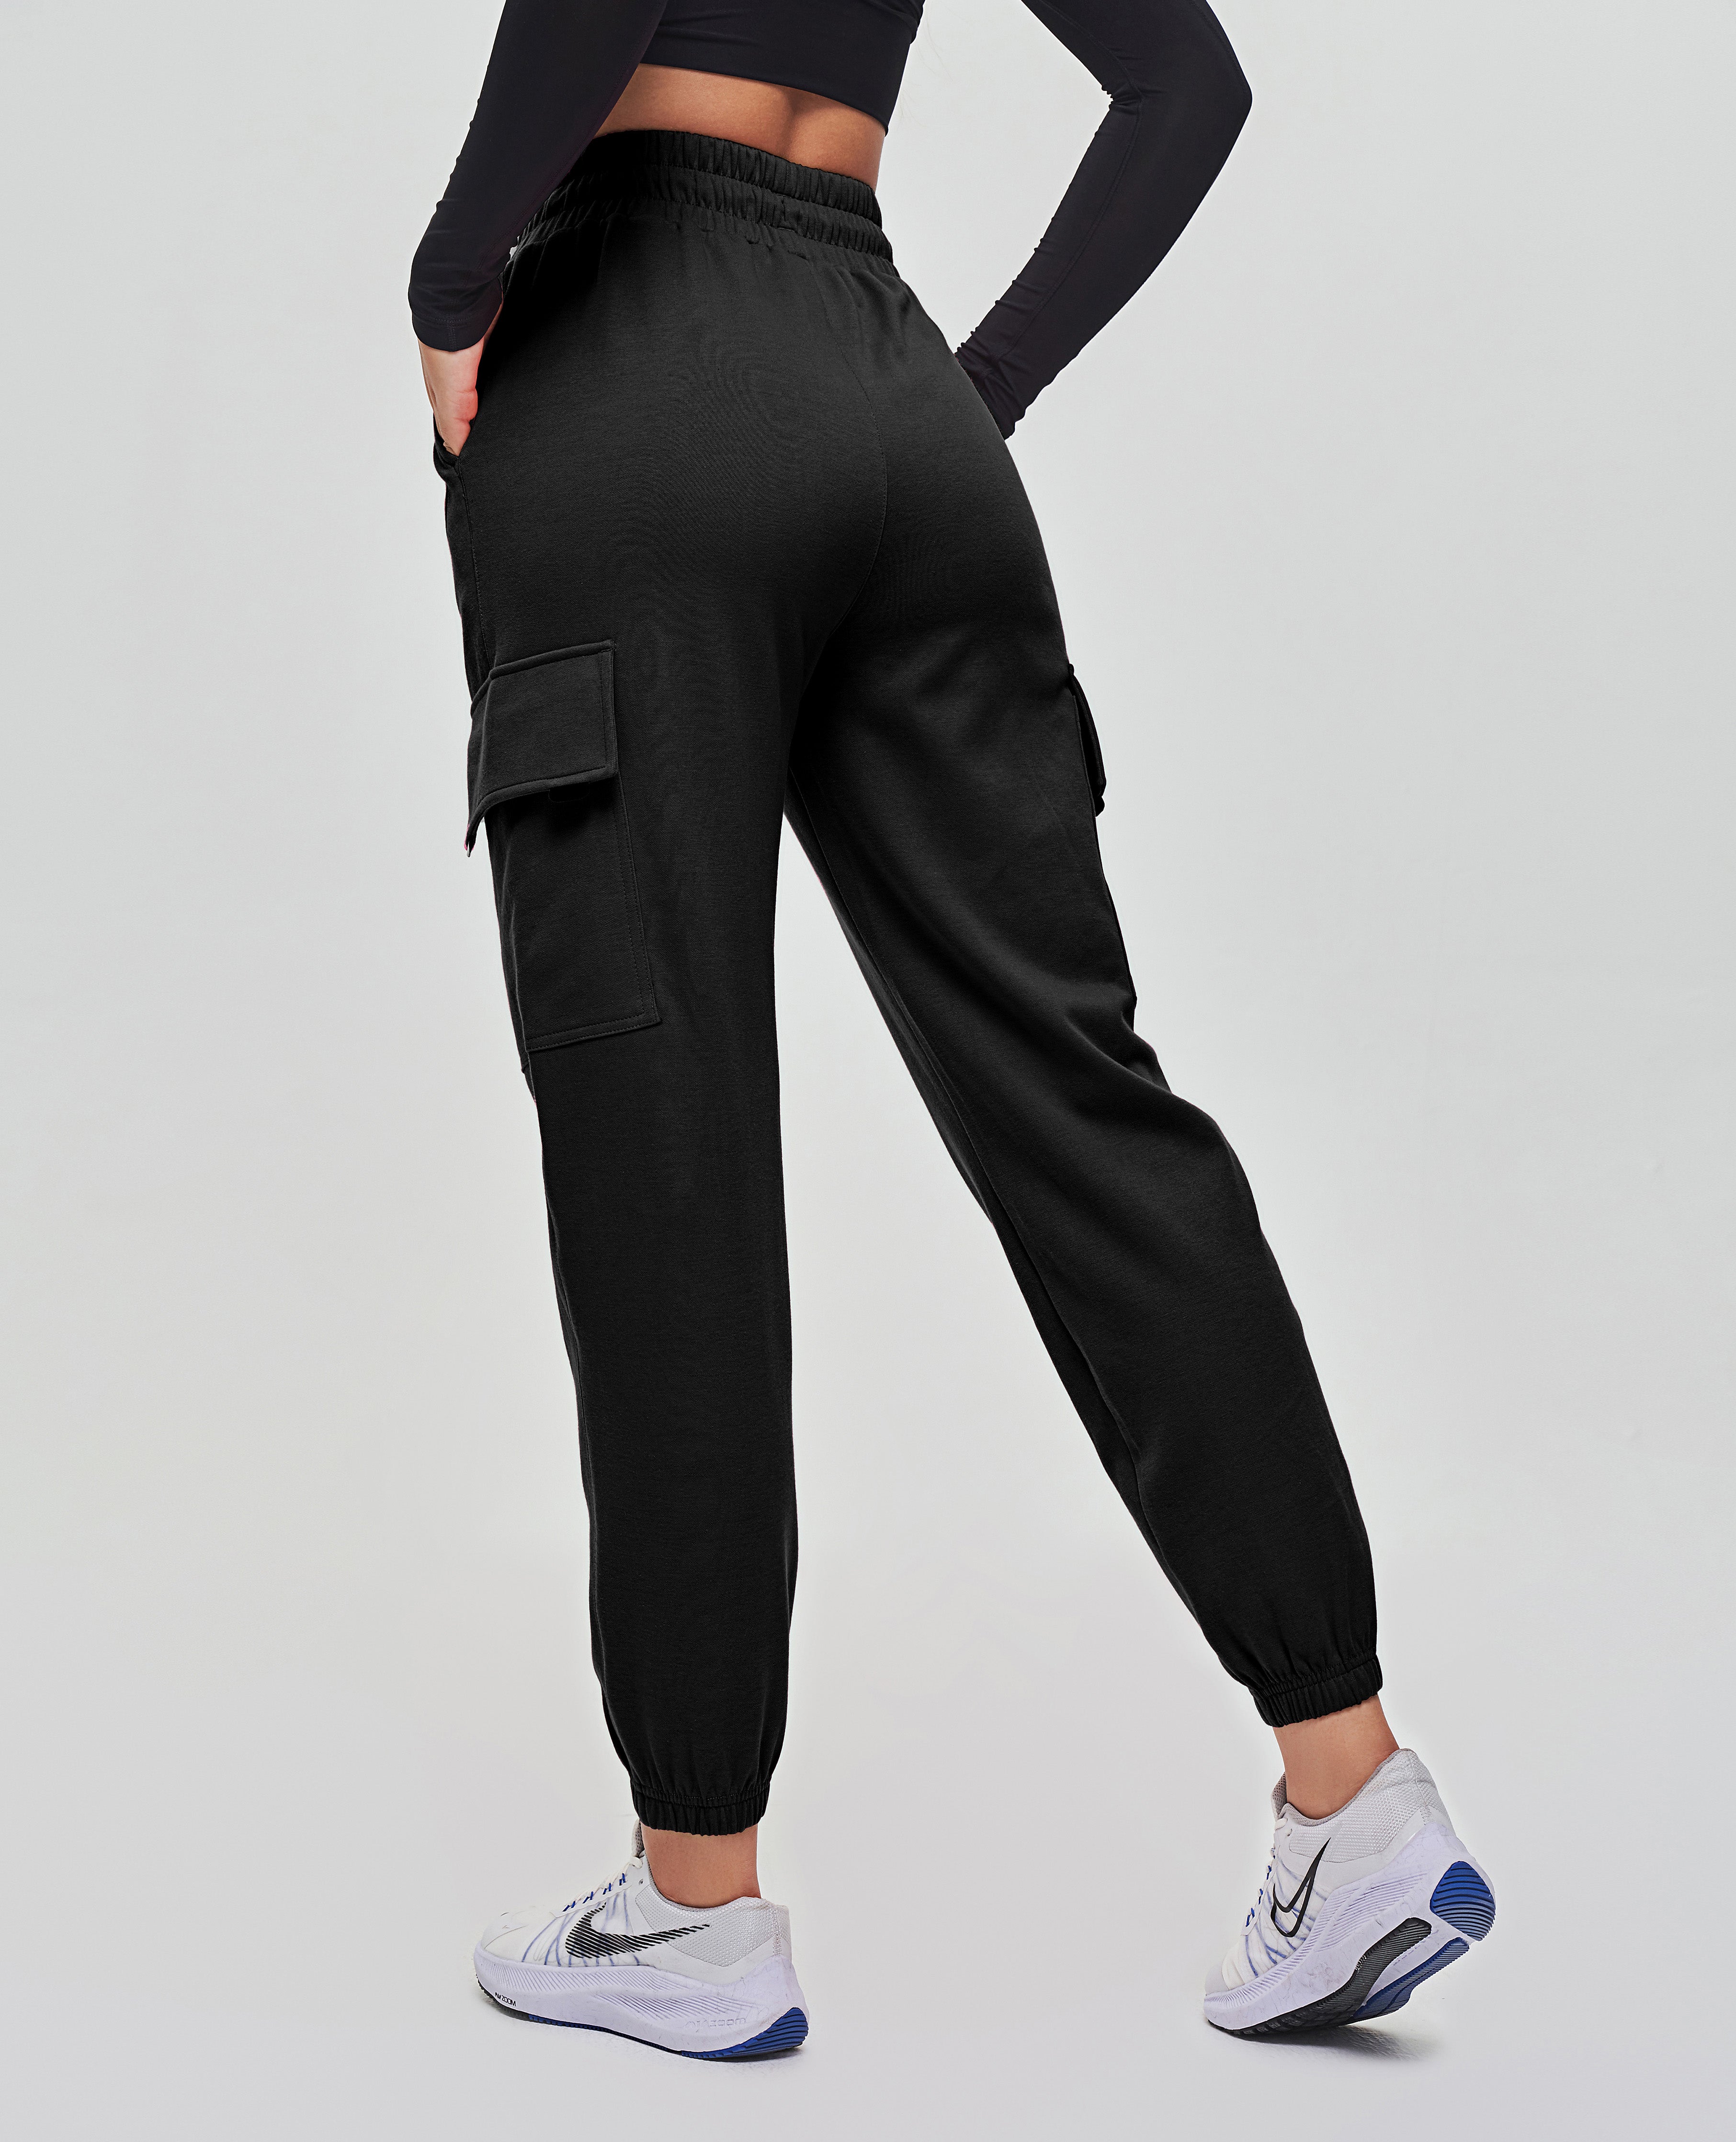 Niuer Women Plus Size Sweatpants Bootcut Yoga Jogger Pants Pocket Casual  Tracksuit Bottoms Workout Lounge Running Jogging Activewear